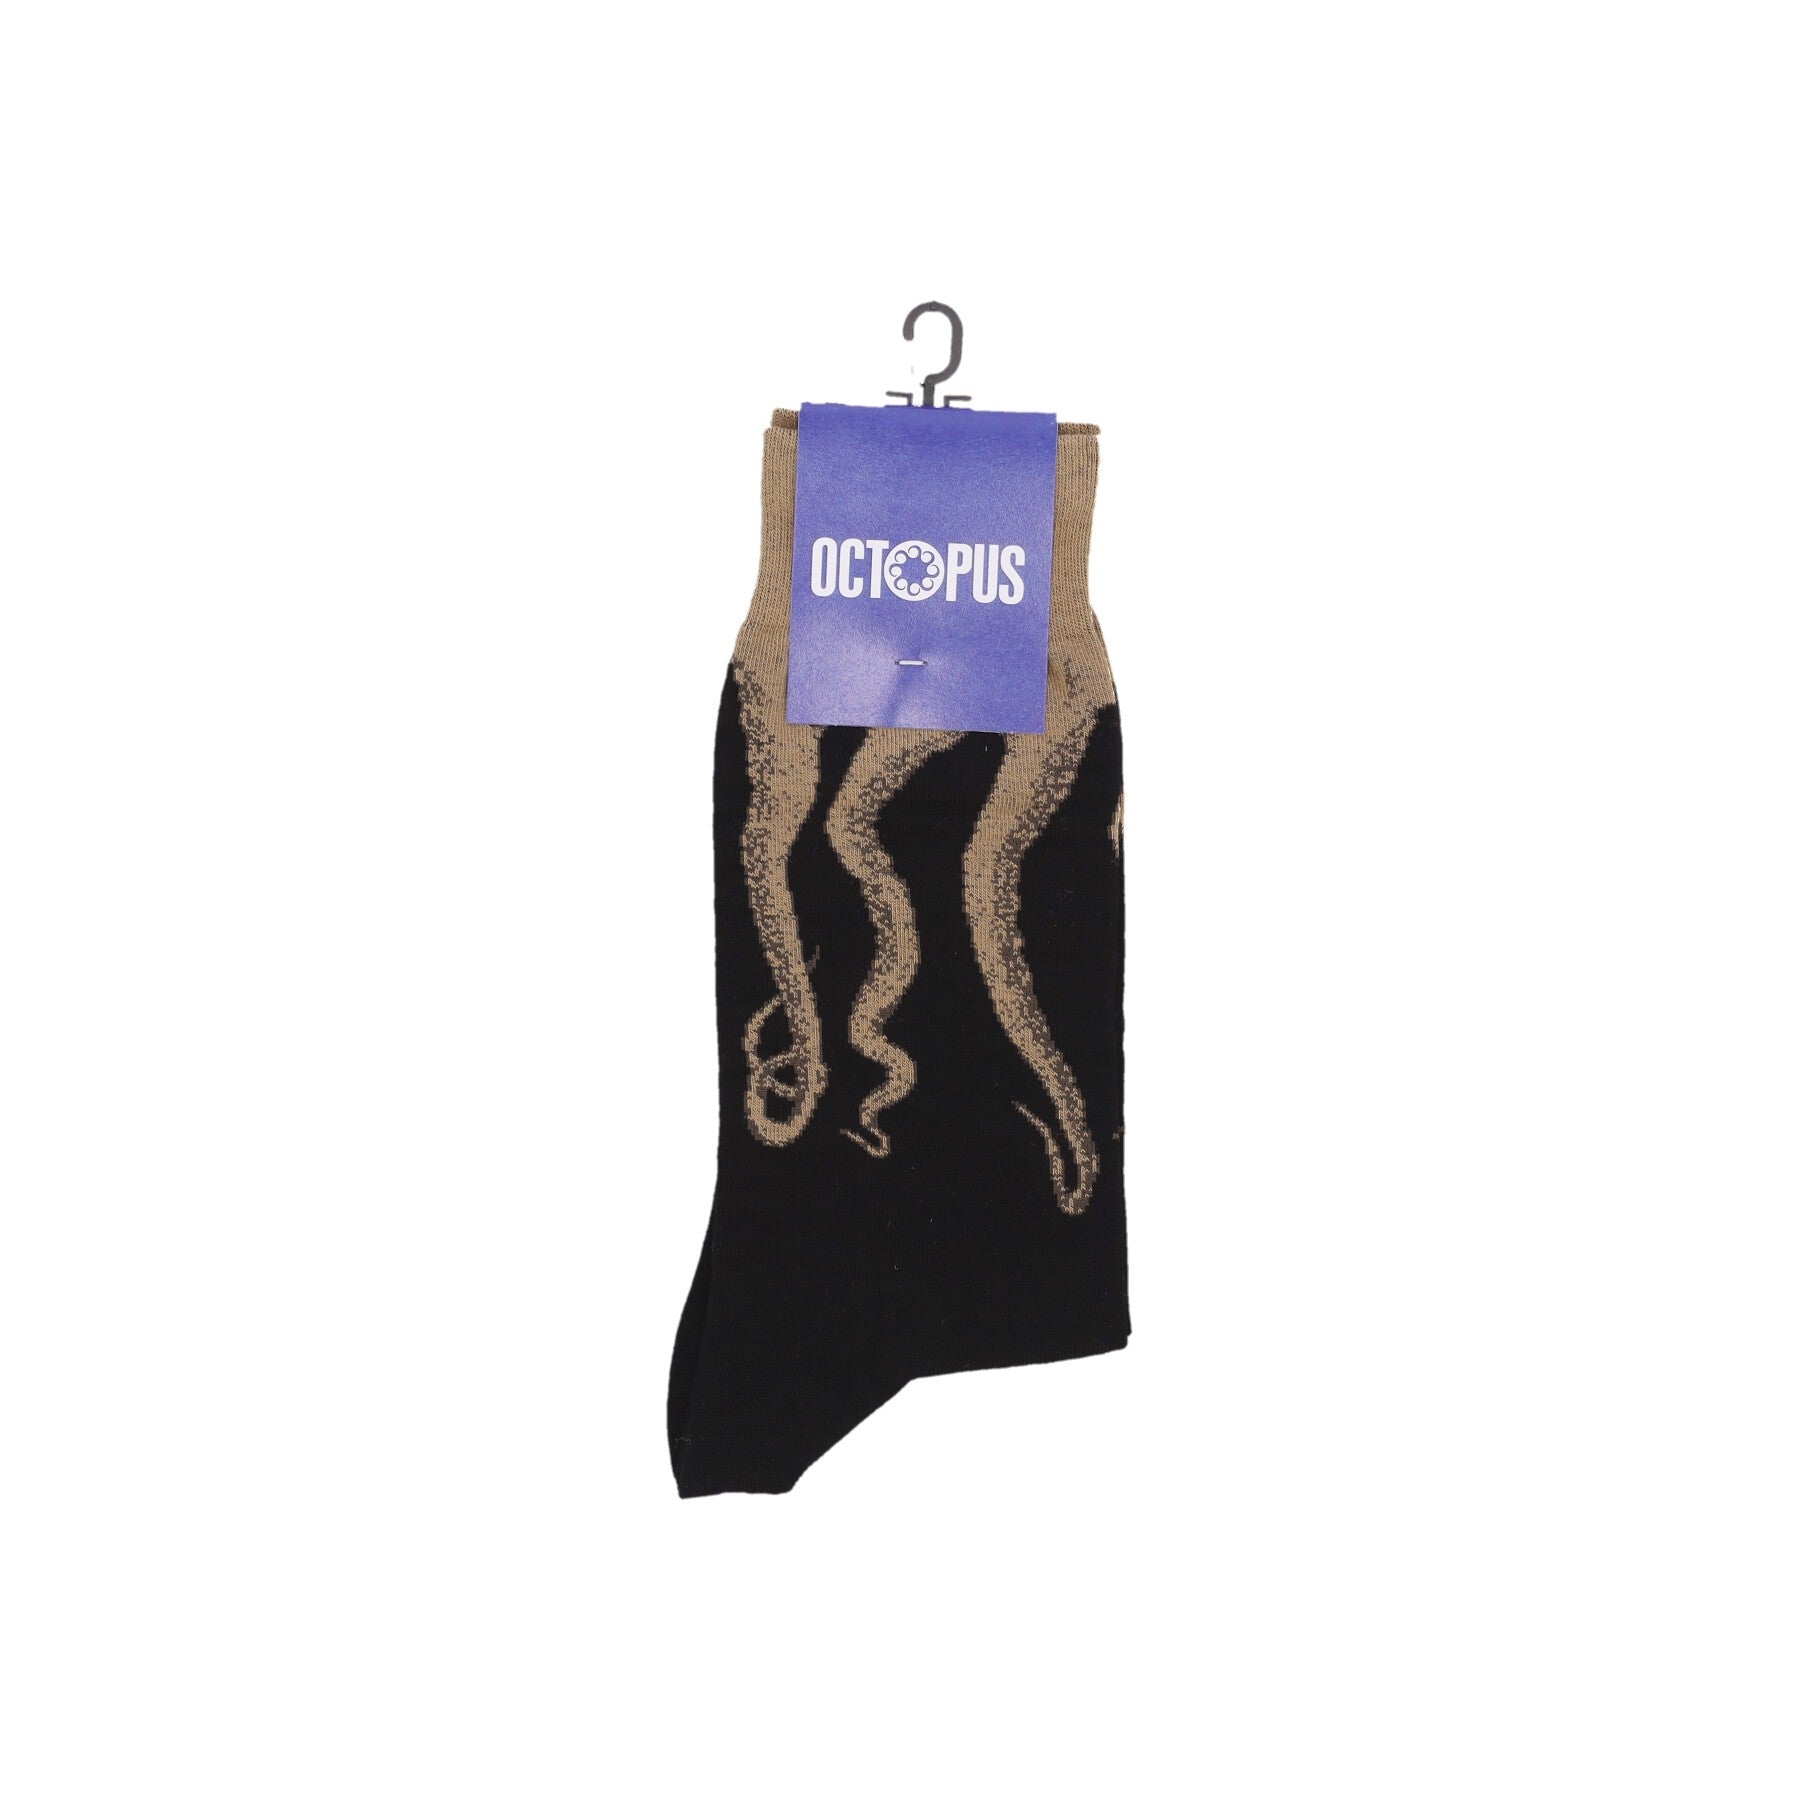 Octopus, Calza Media Uomo Original Socks, 